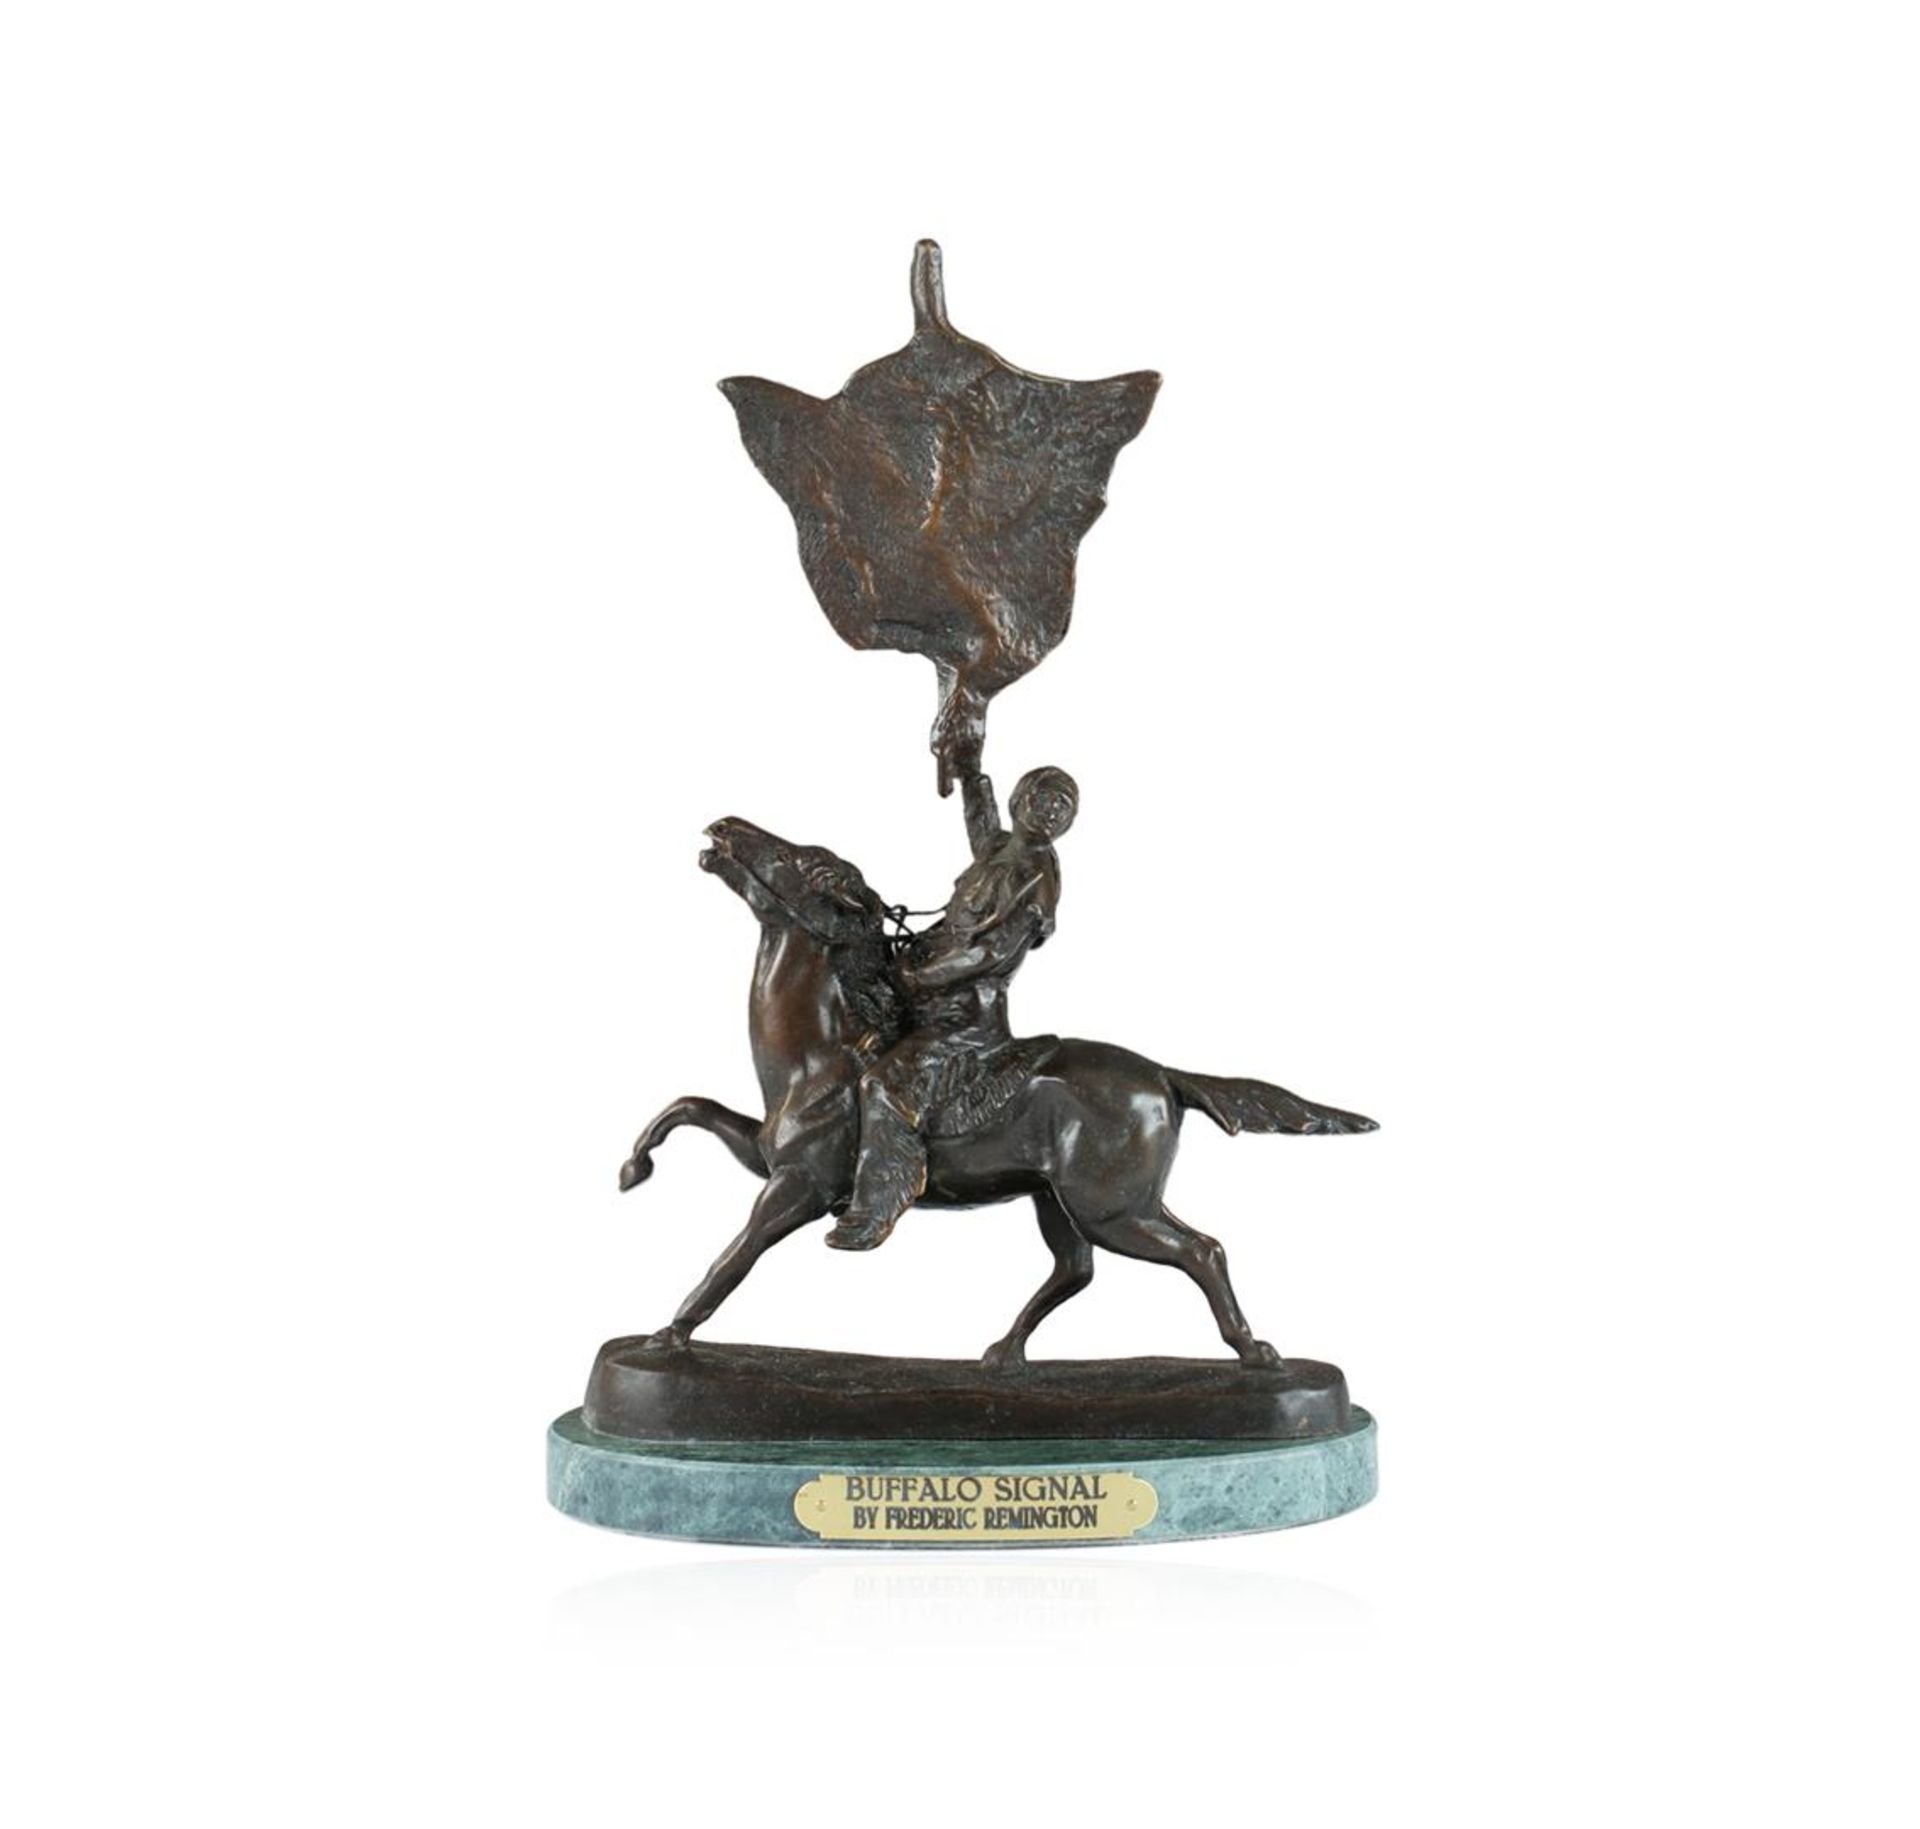 Buffalo Signal Bronze Replica By Frederic Remington - Image 2 of 3